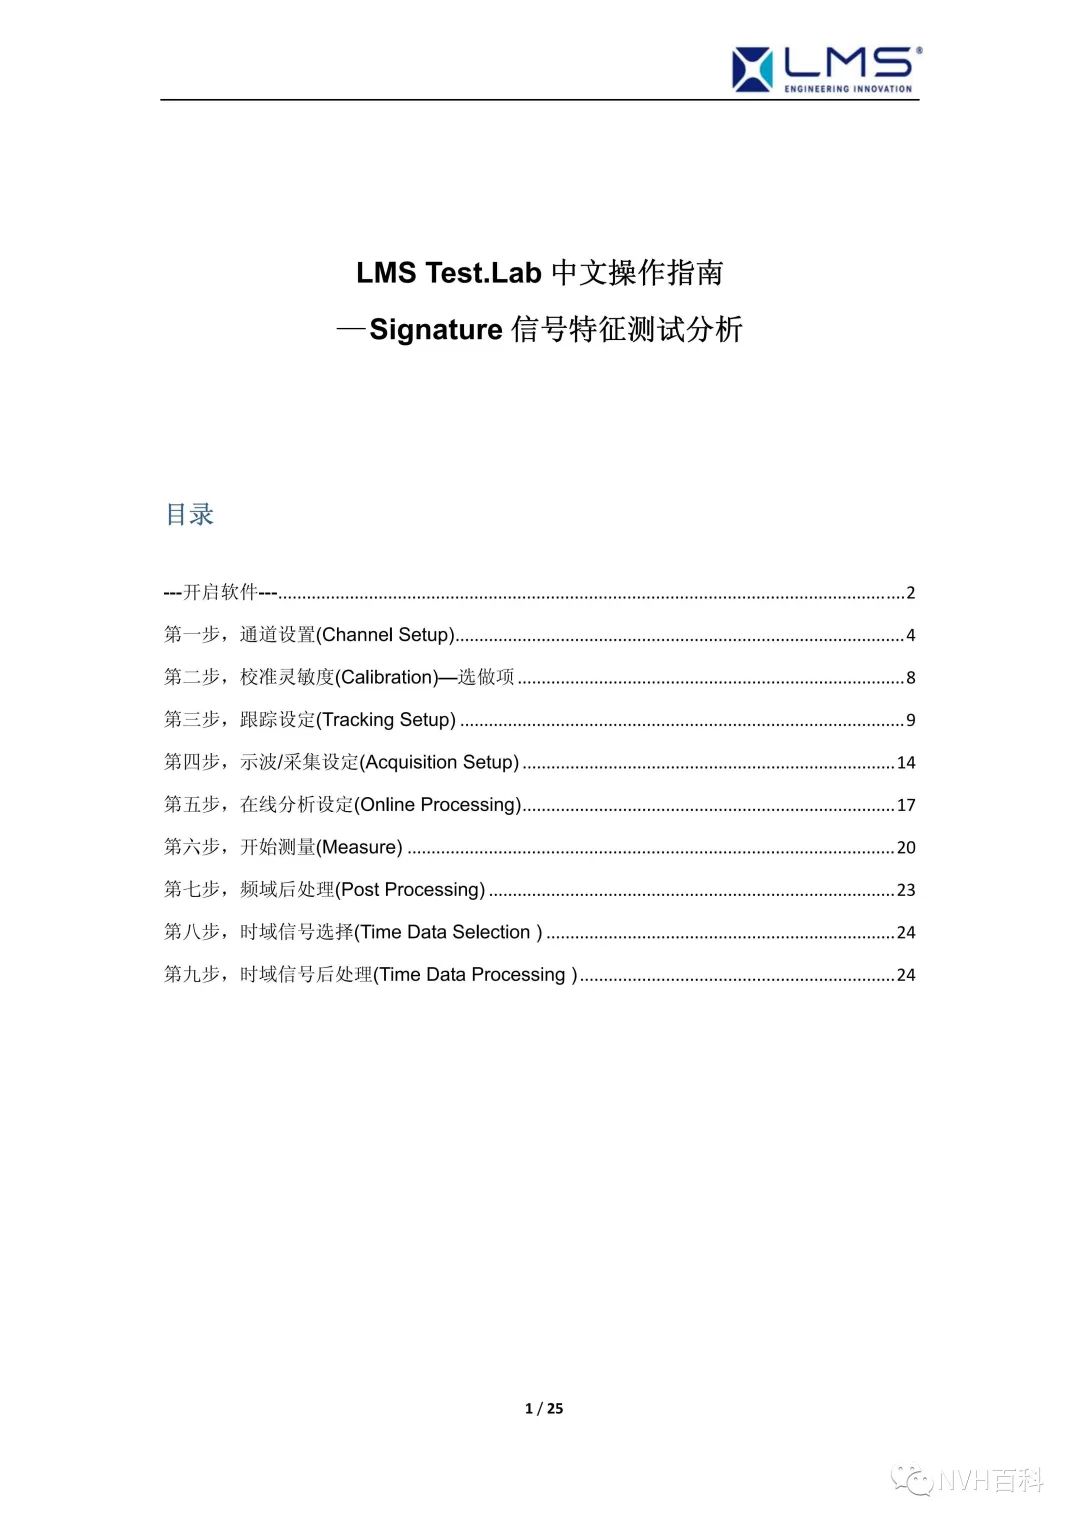 LMS .Test.Lab中文操作指南--LMS Signature信号特征测试分析w1.jpg